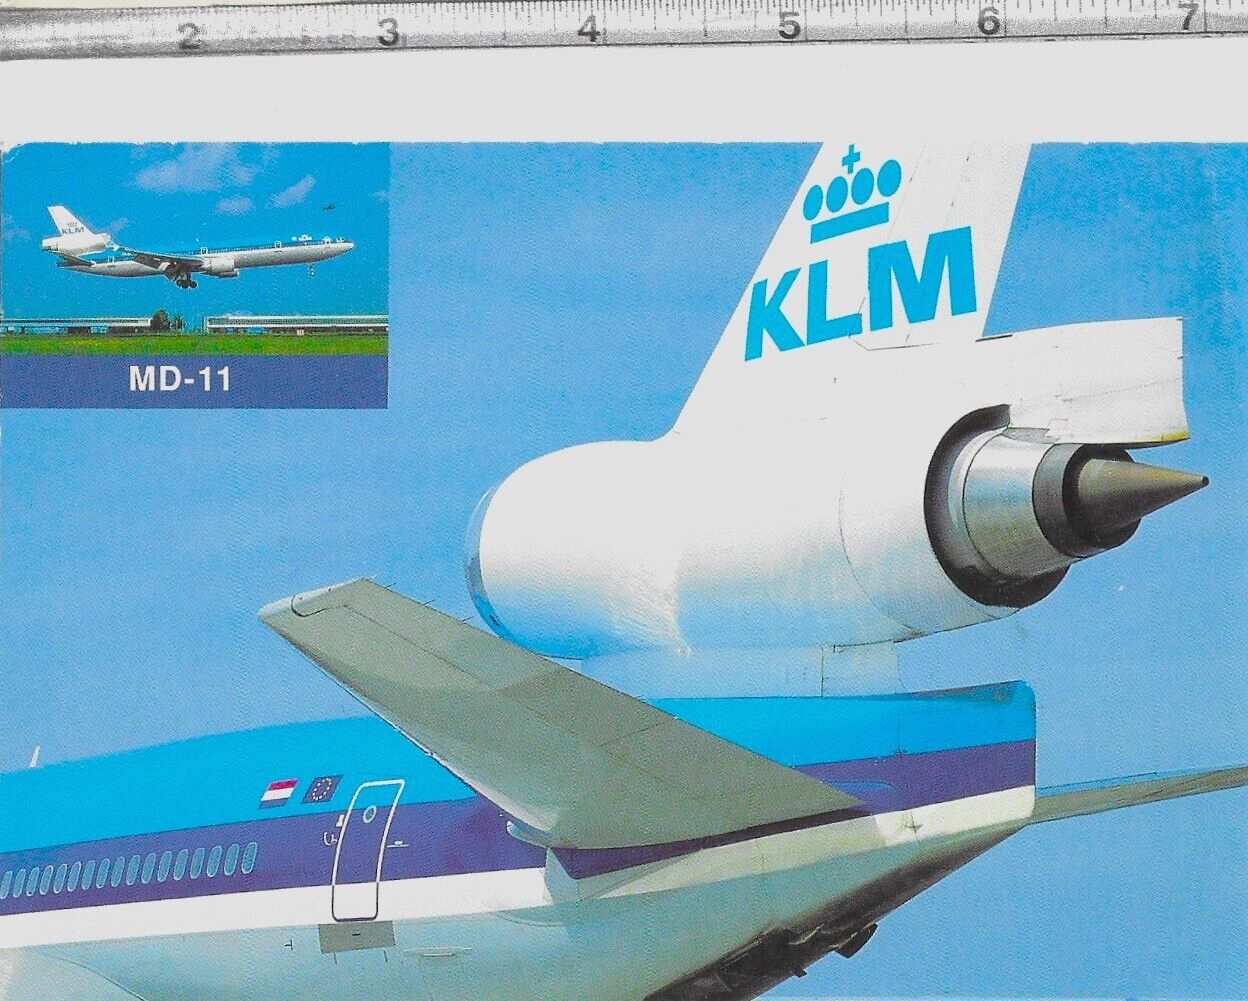 Large KLM MD-11 Postcard, Airline issued